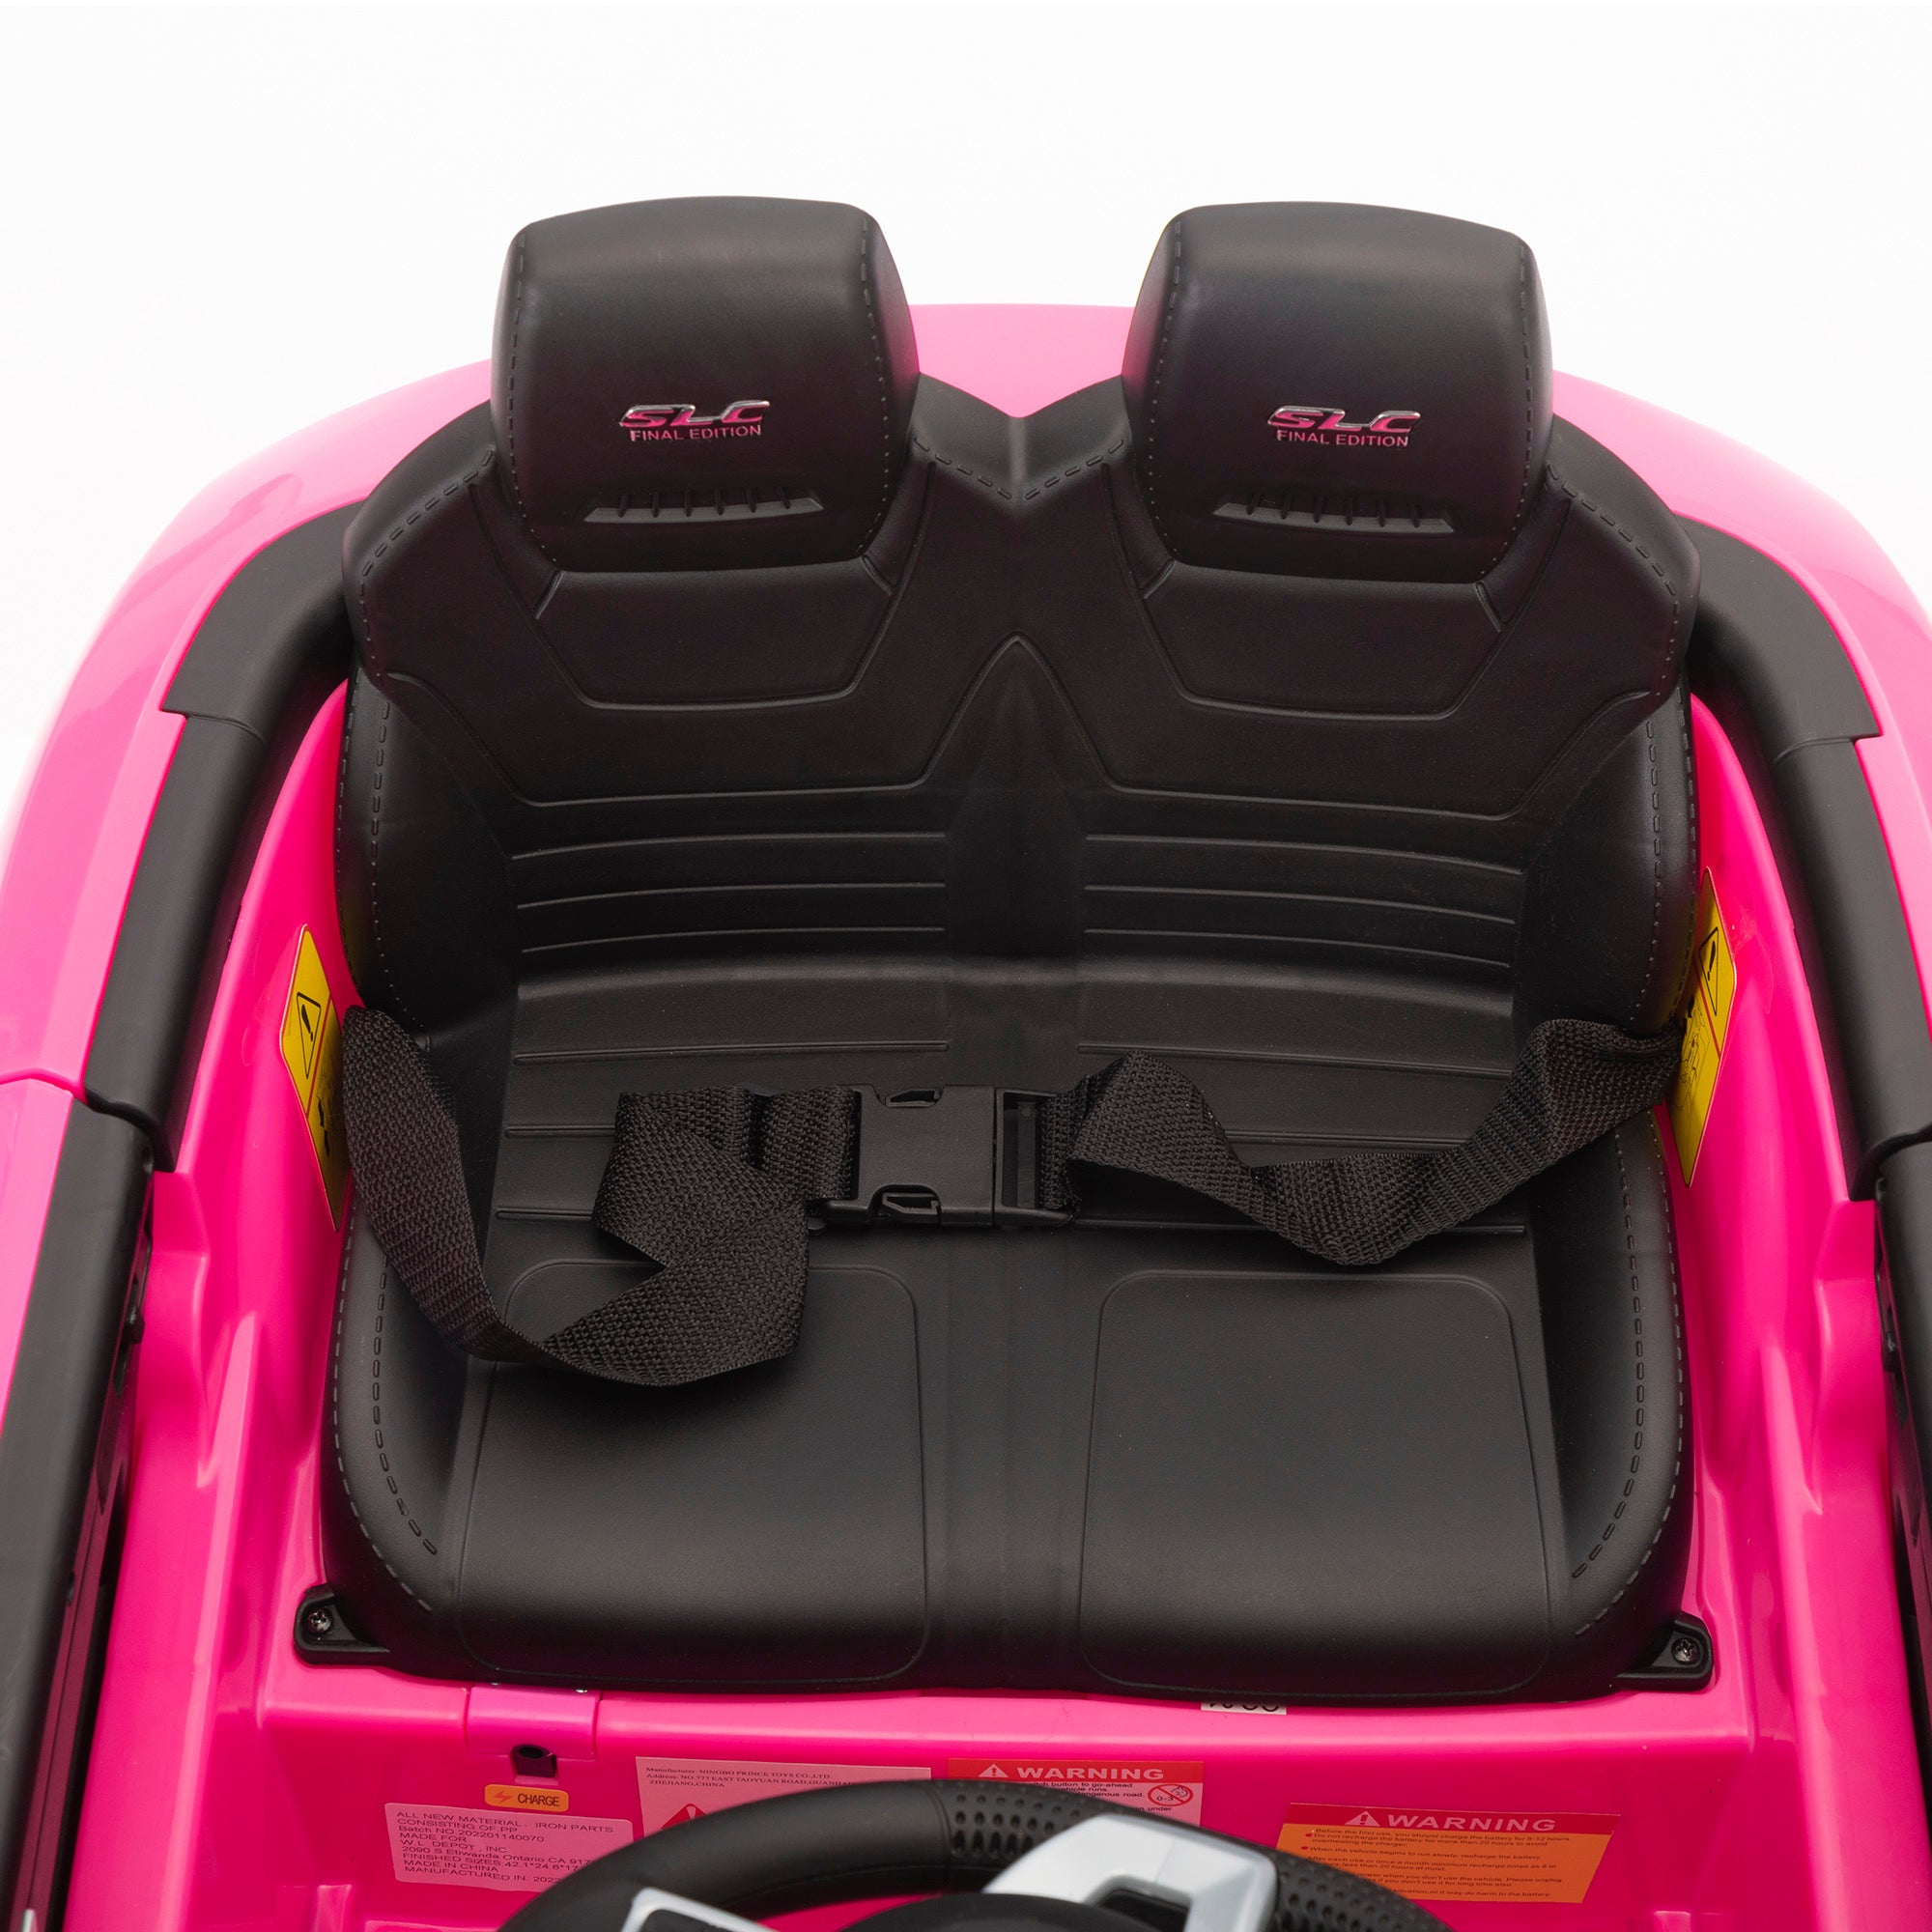 12v Kids Slc300 Ride On Toy Car, Electric Battery